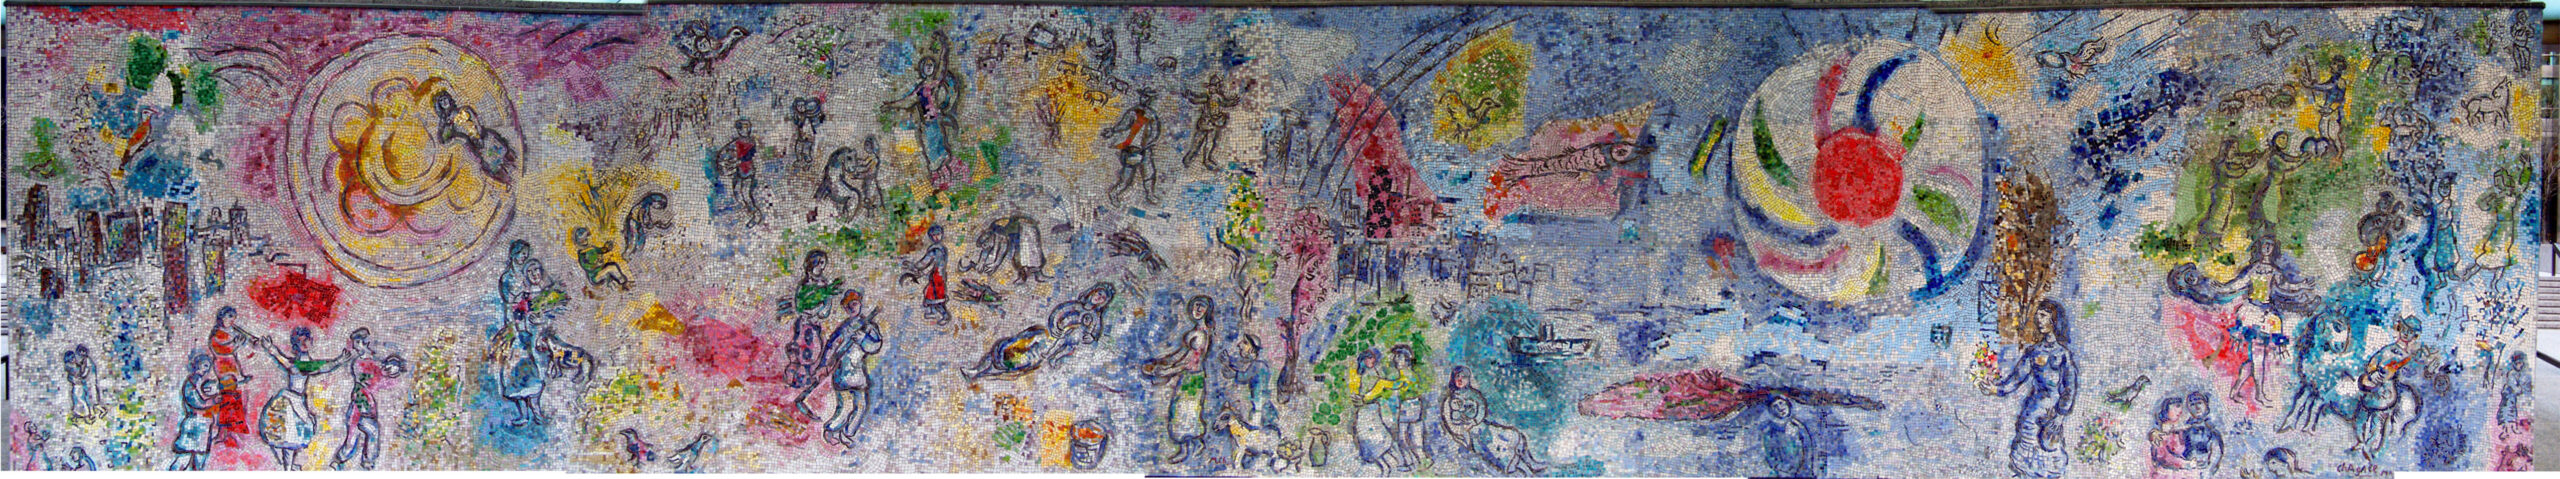 Chagall Mosaic